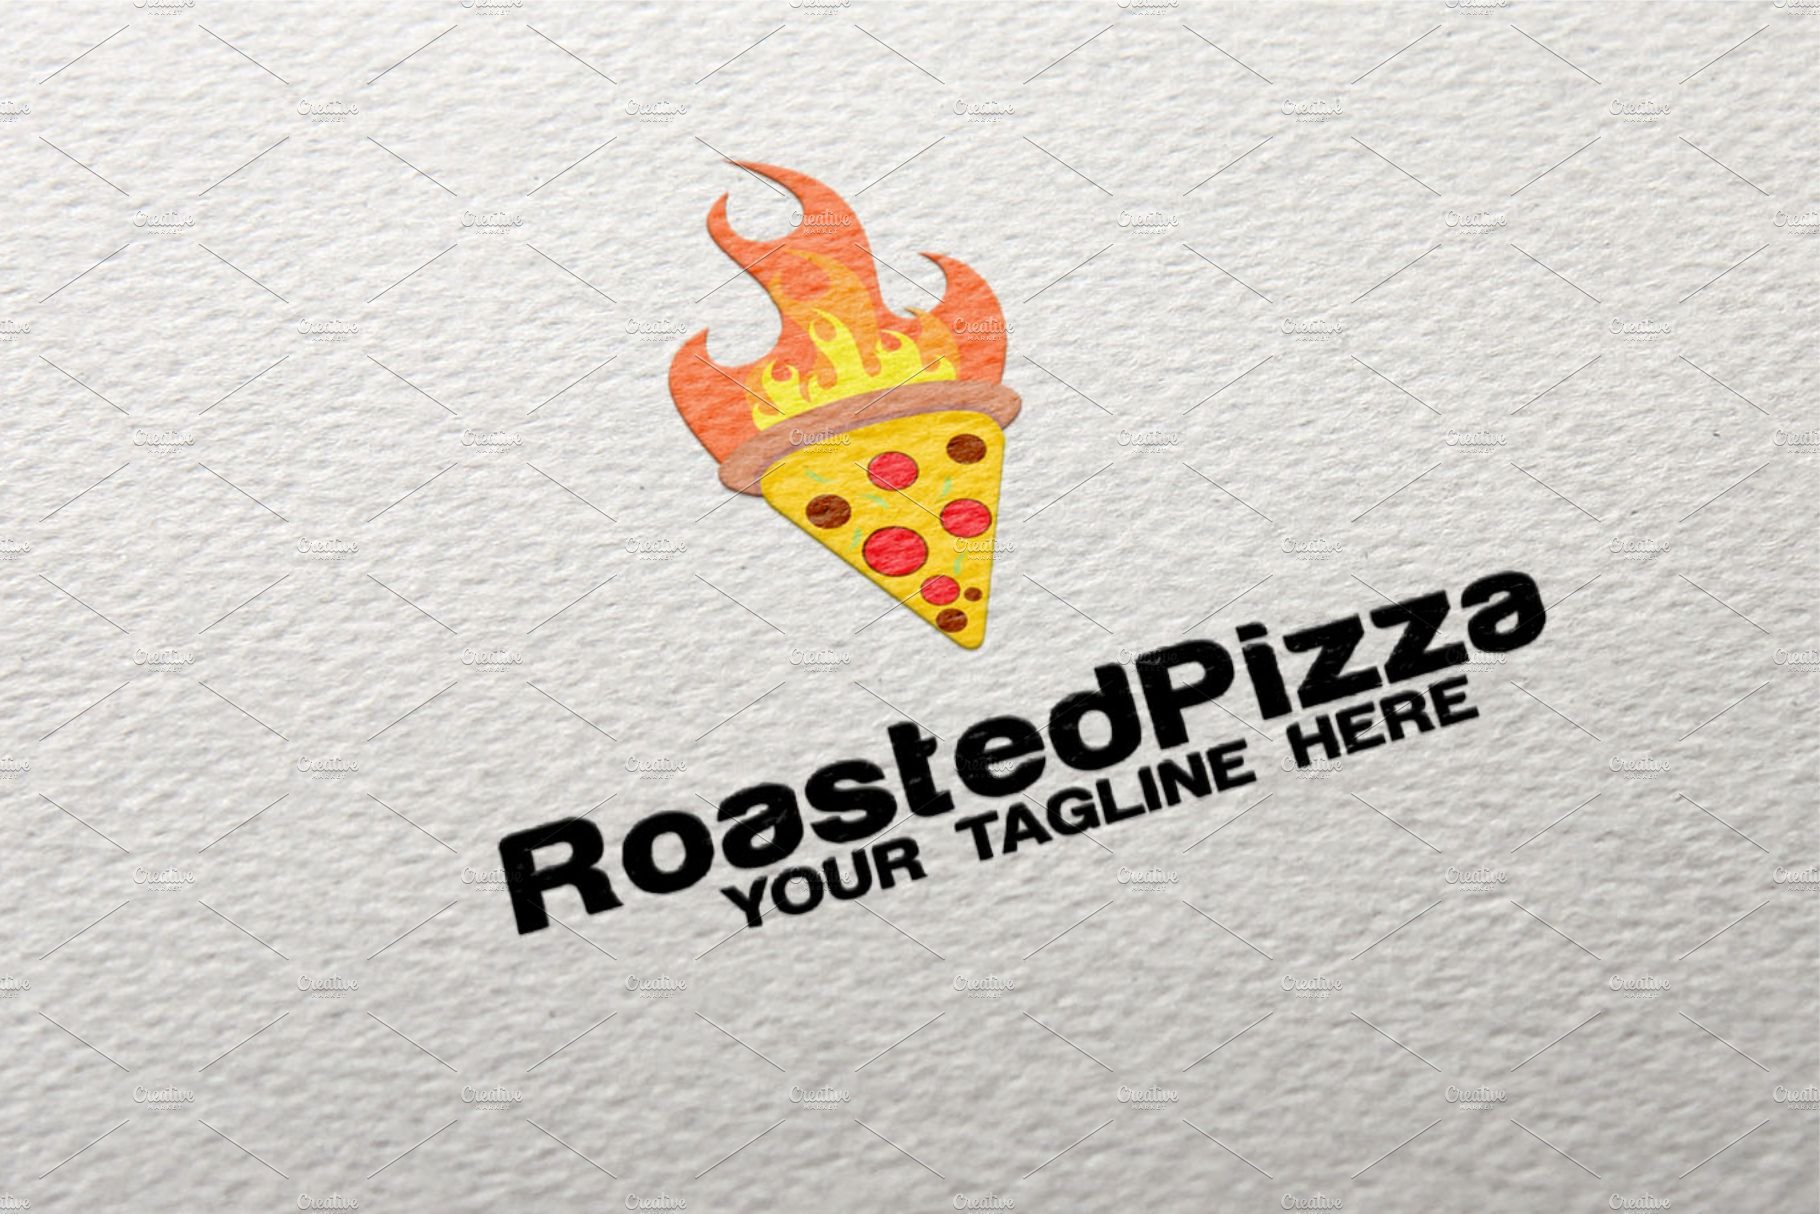 Roasted Pizza Logo cover image.